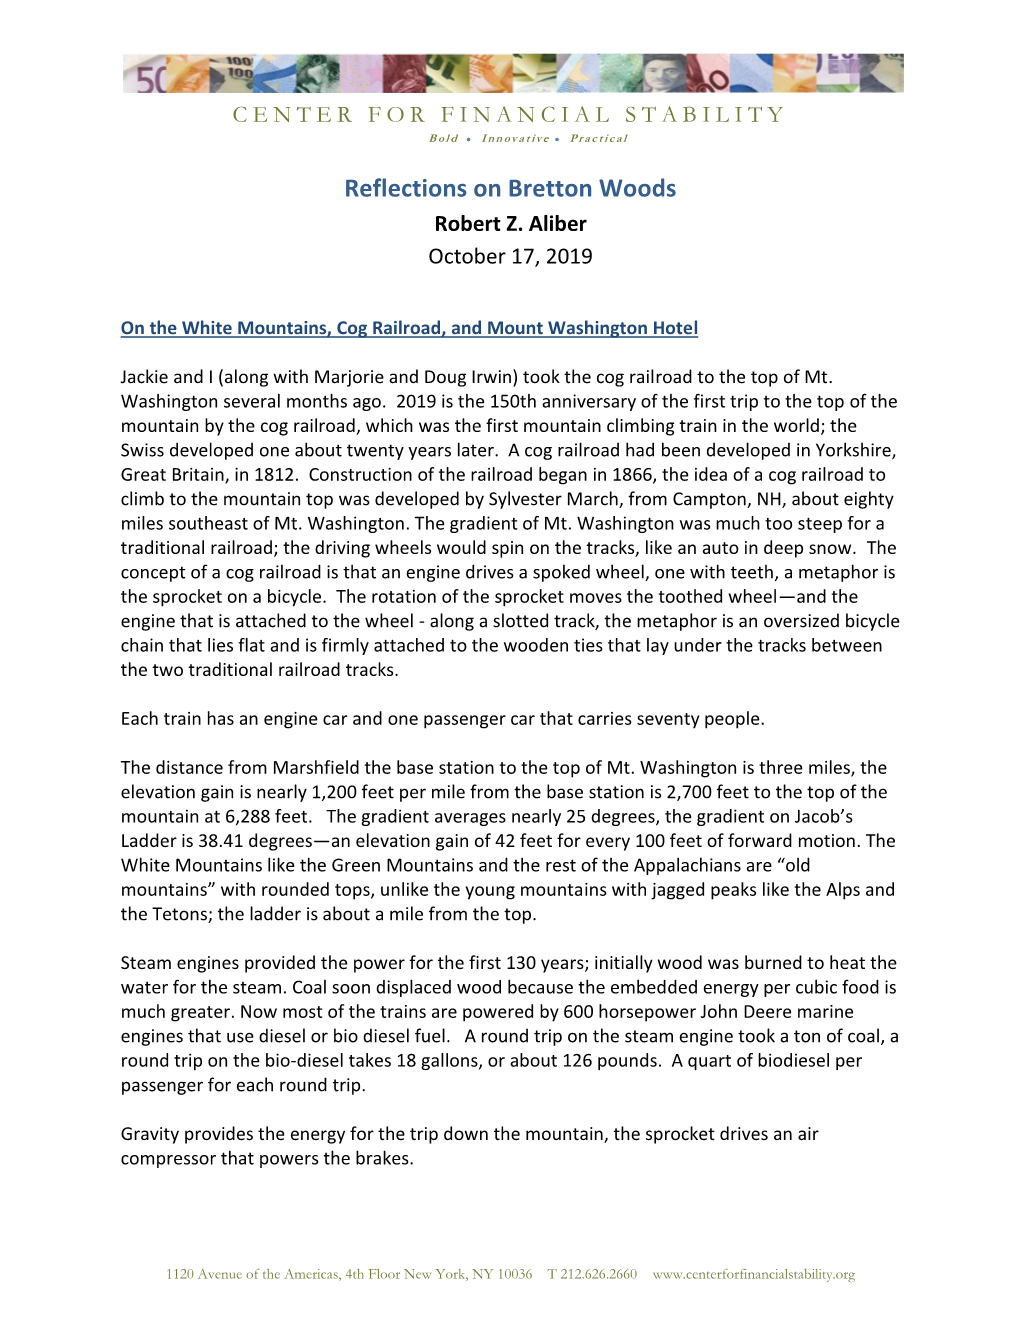 Reflections on Bretton Woods Robert Z